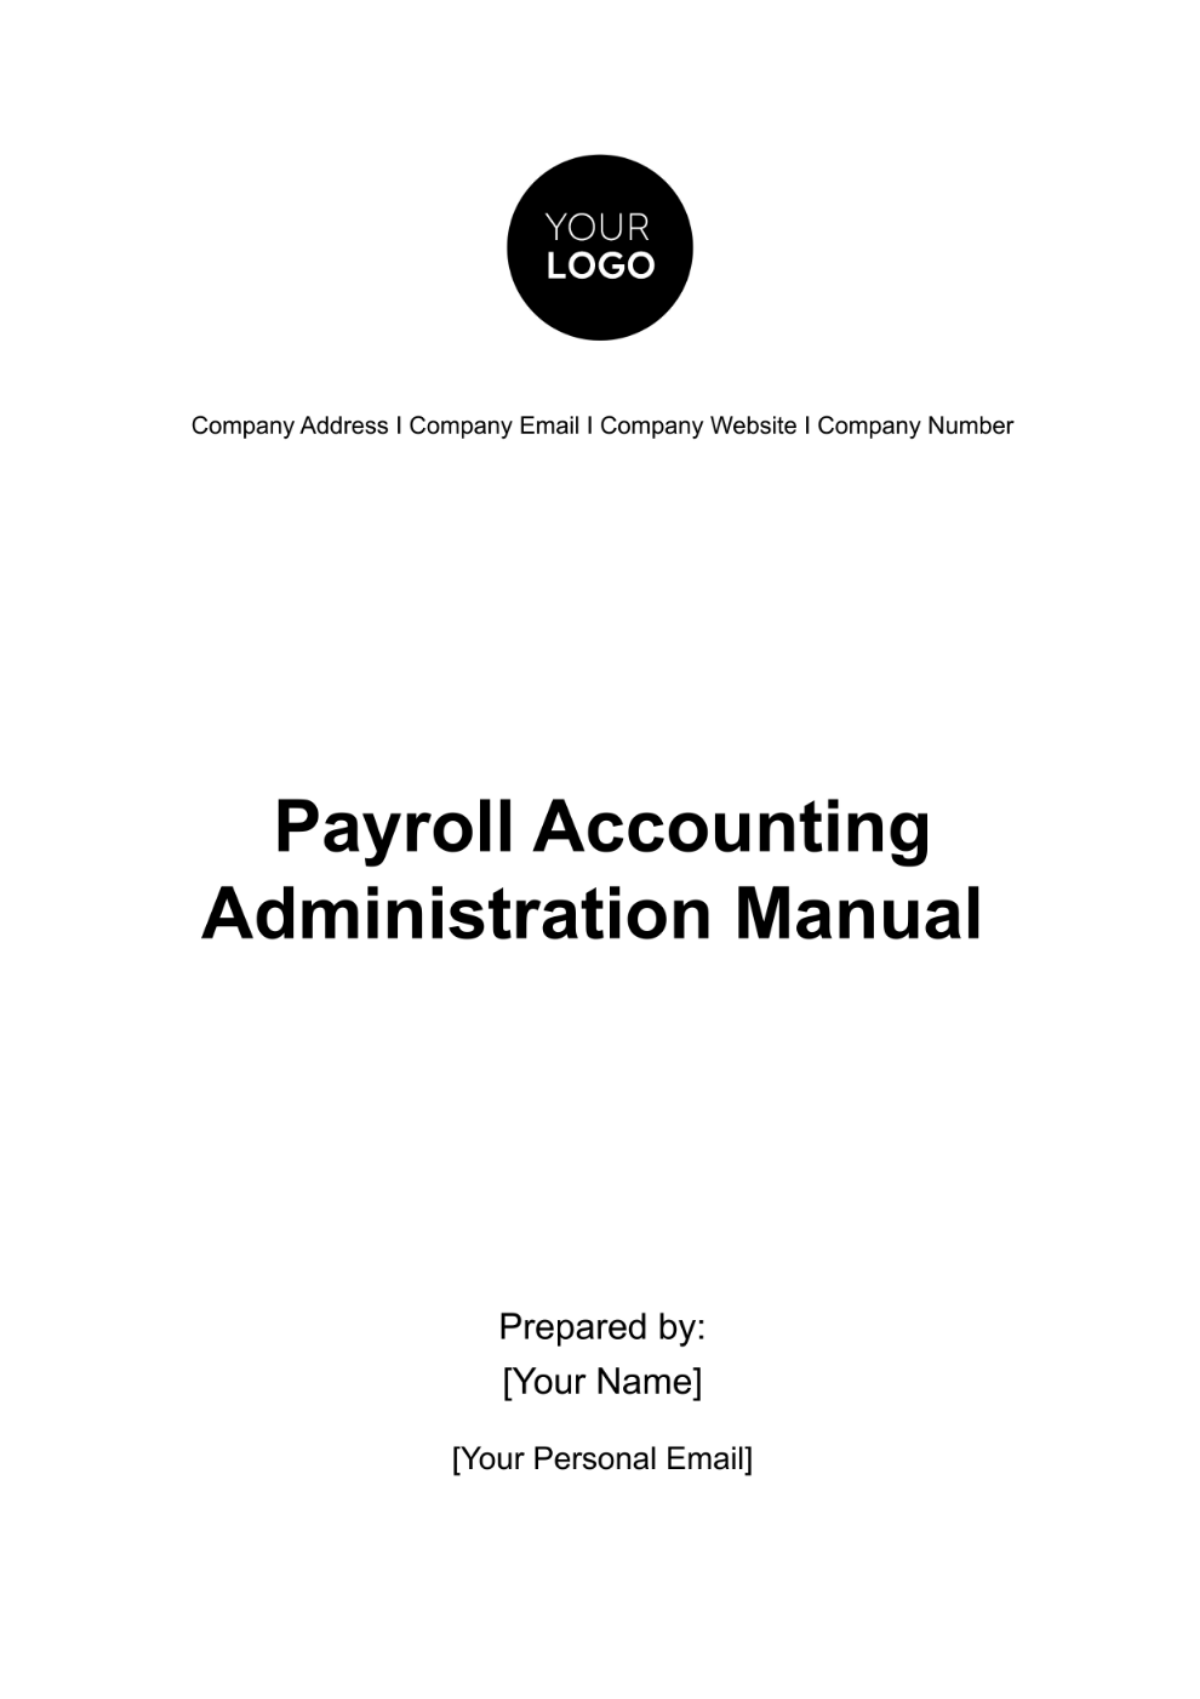 Payroll Accounting Administration Manual Template